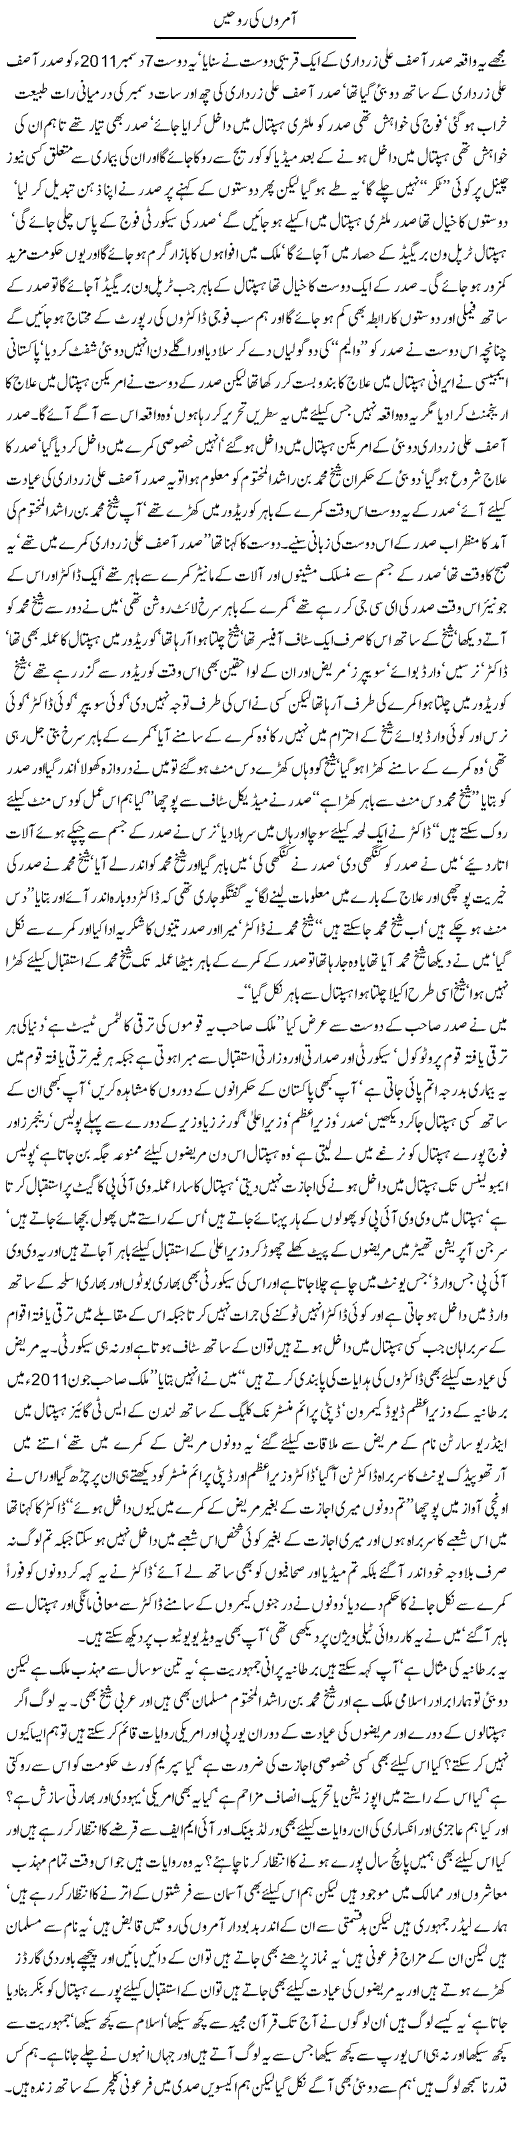 Zardari Health and Dictators - Urdu Column